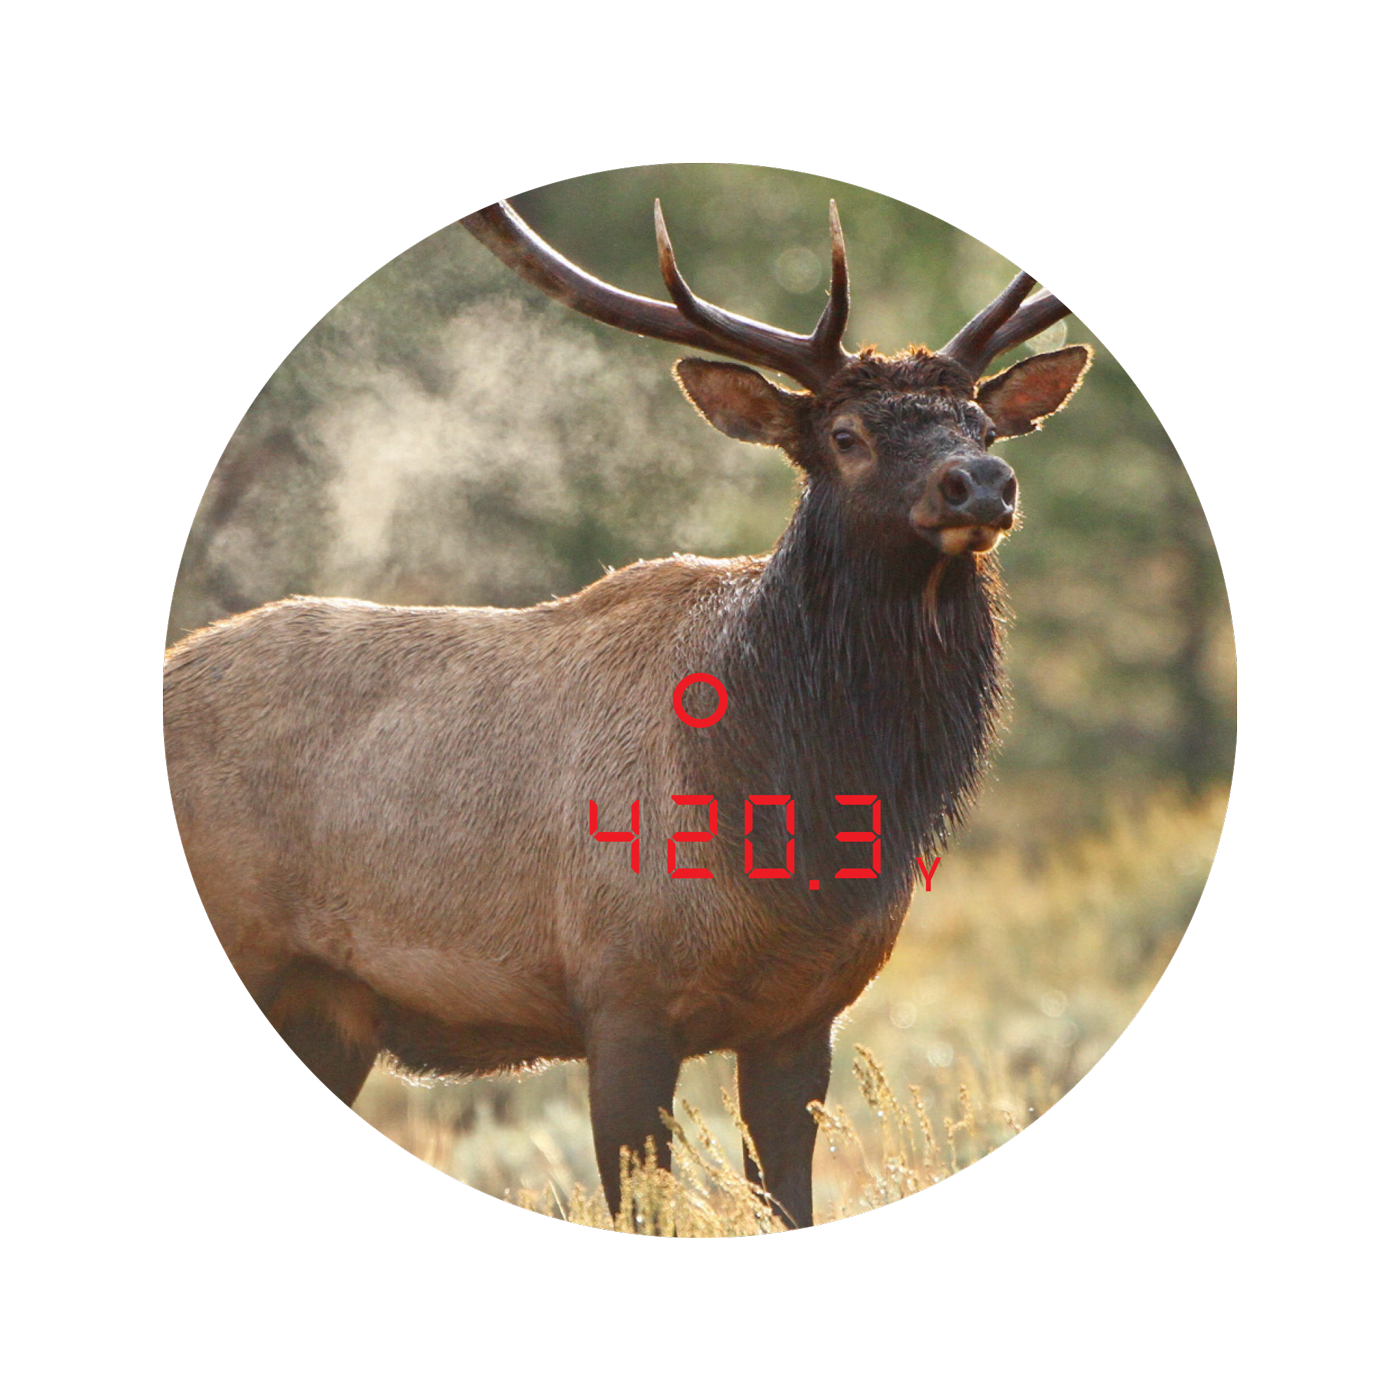 Cronus Rangefinding Binocular 10x50mm lens veiw of a bull elk